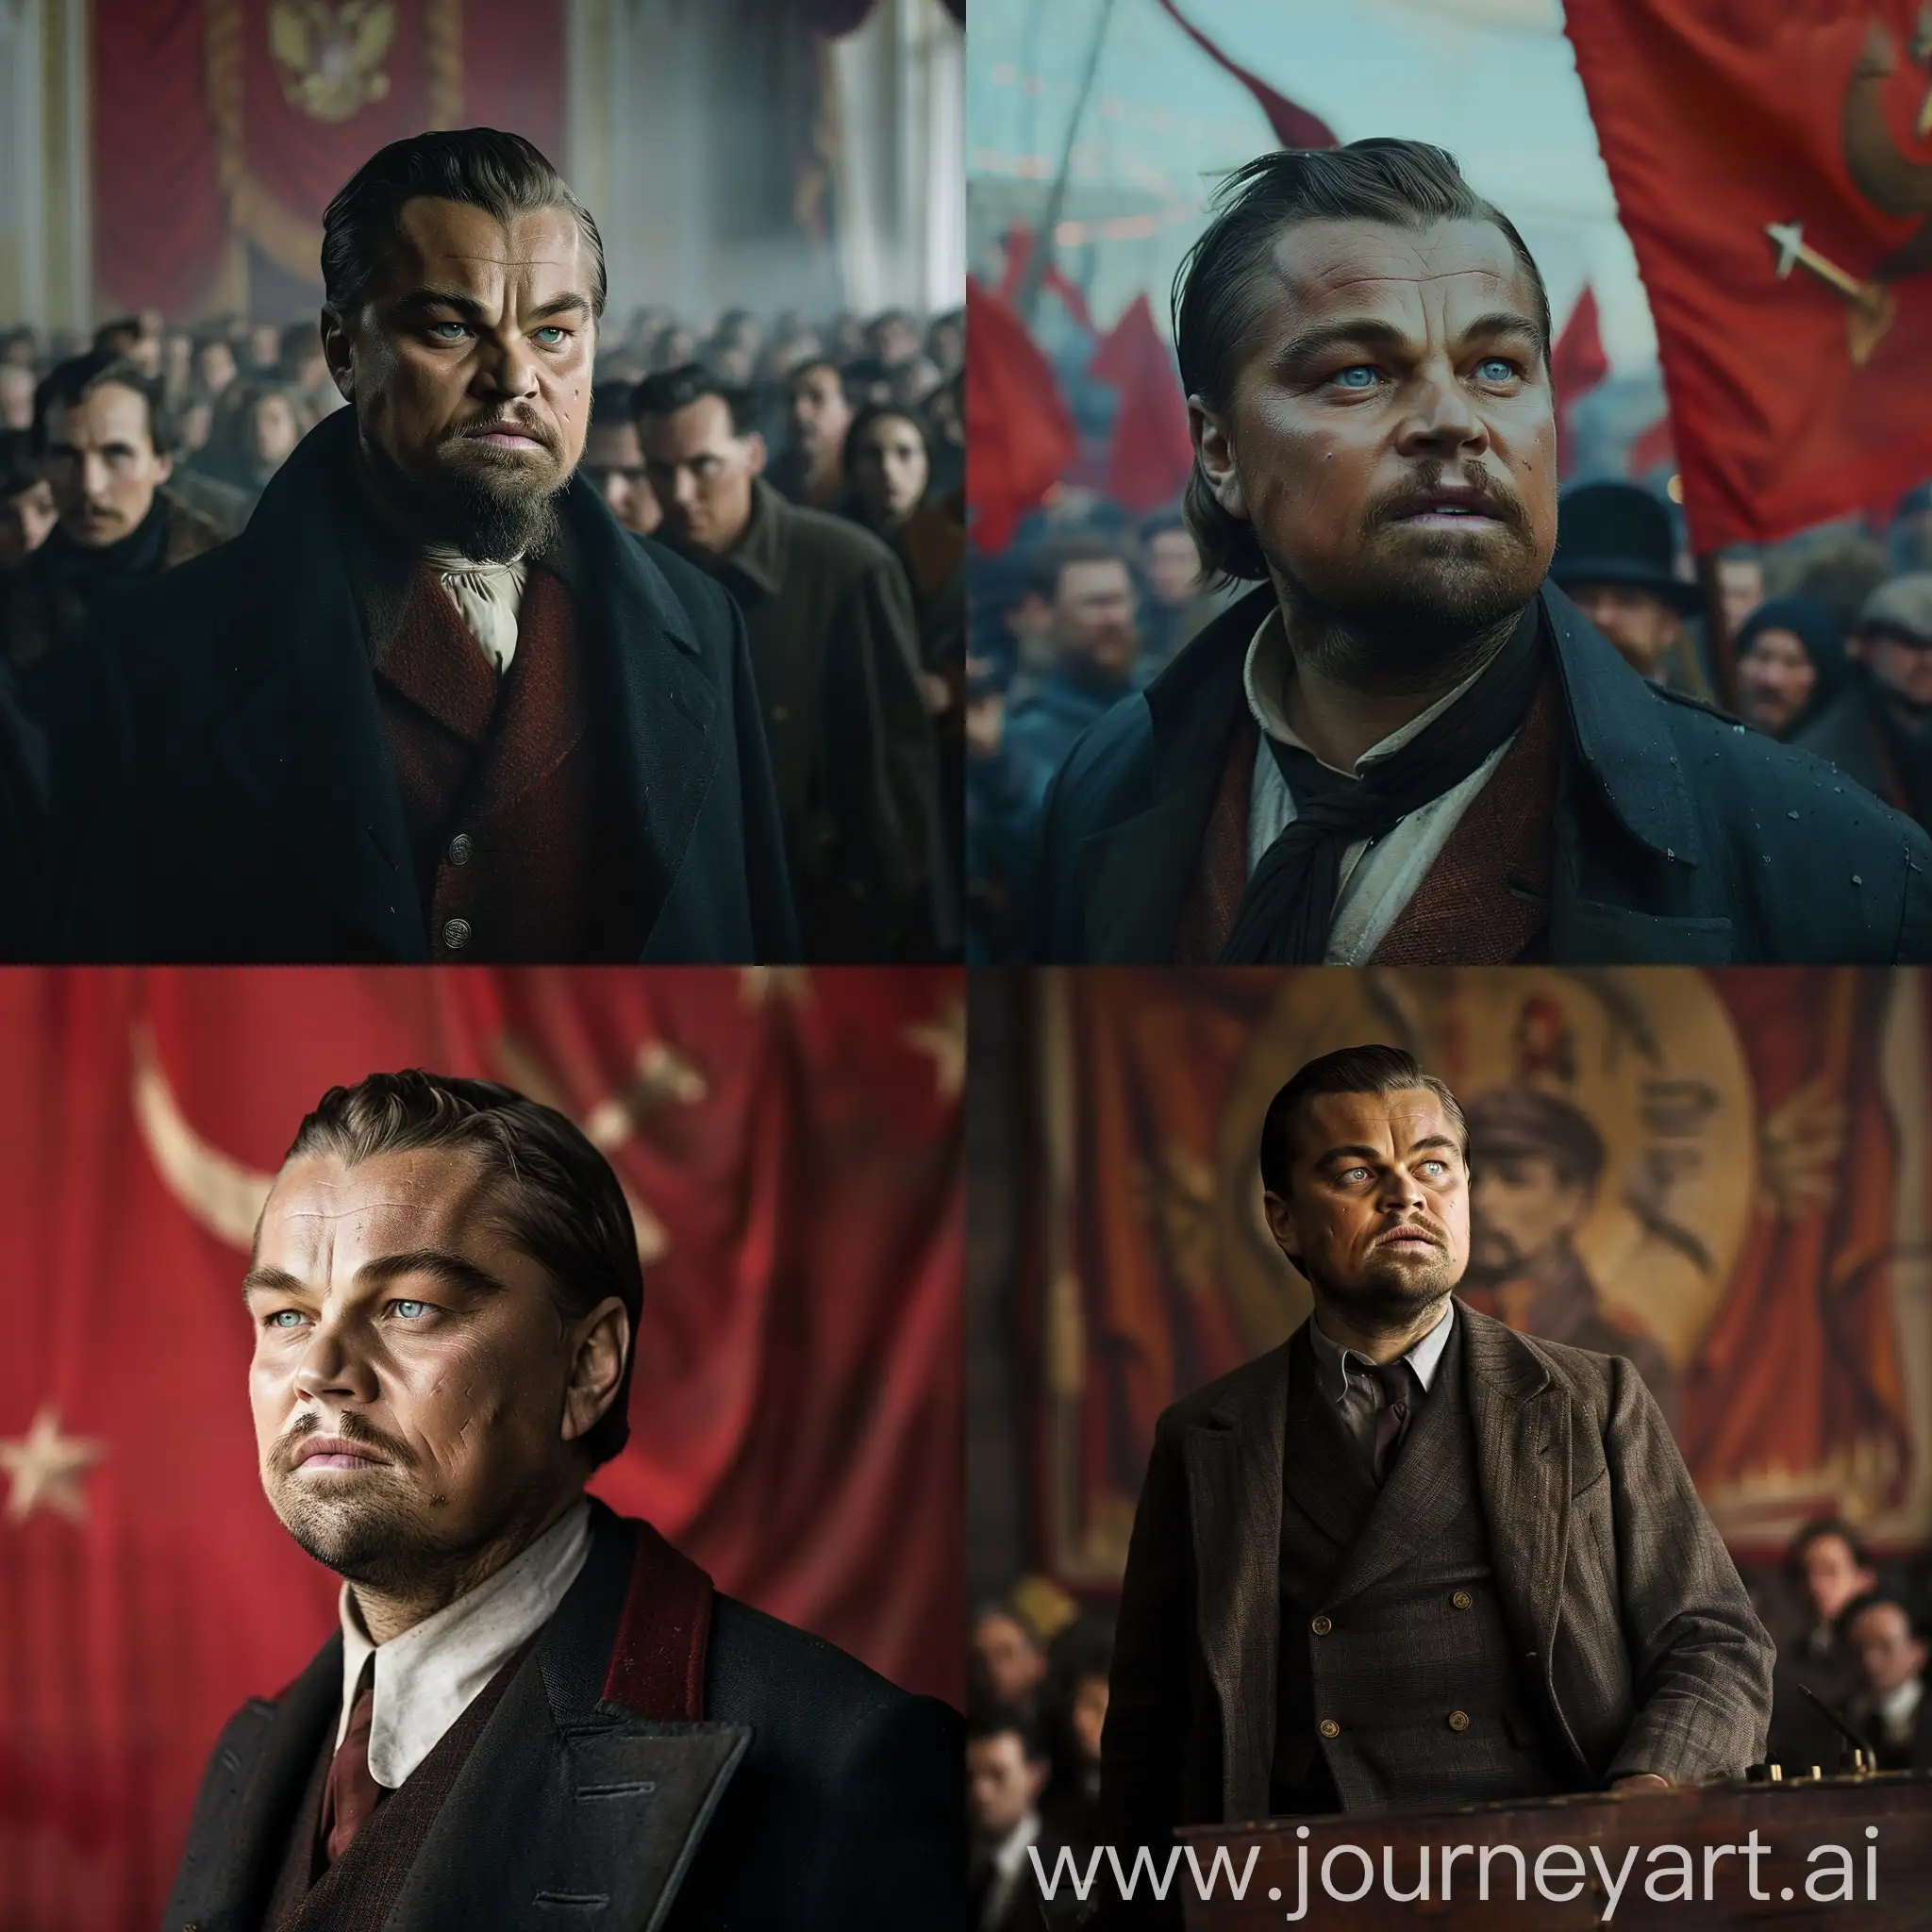 Leonardo-DiCaprio-Portrays-Lenin-in-a-Striking-Artistic-Representation